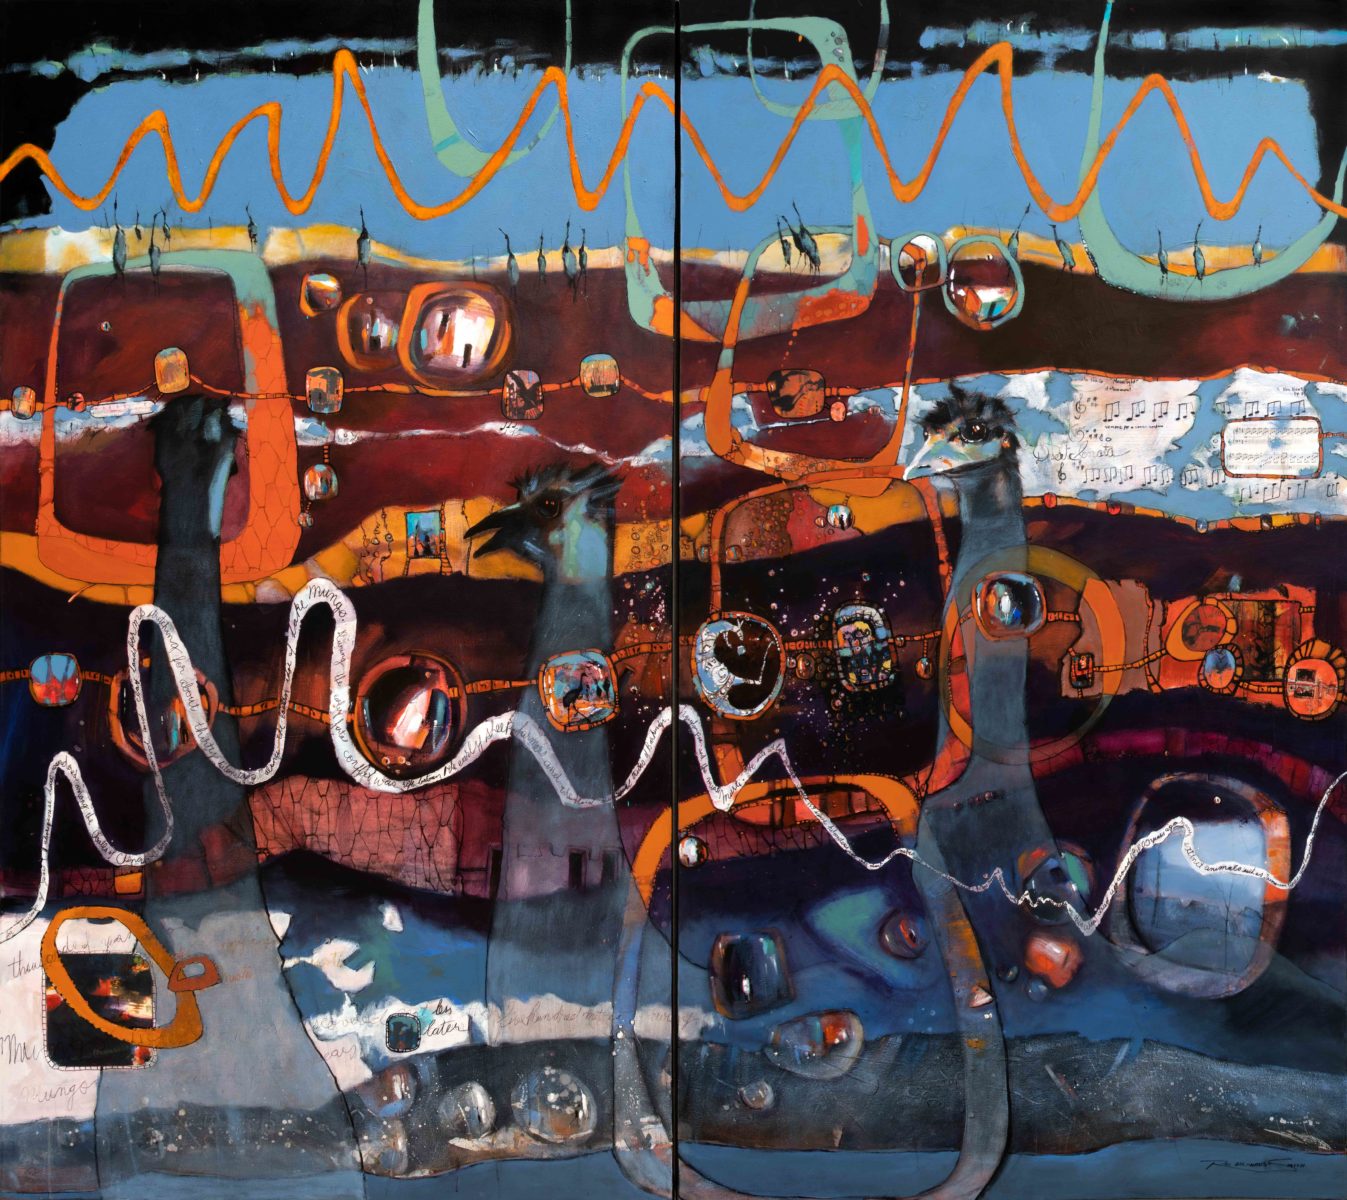 Desert Sonata | Rex Backhaus-Smith | mixed media on canvas | 225 x 250 cm, diptych. | $28,000